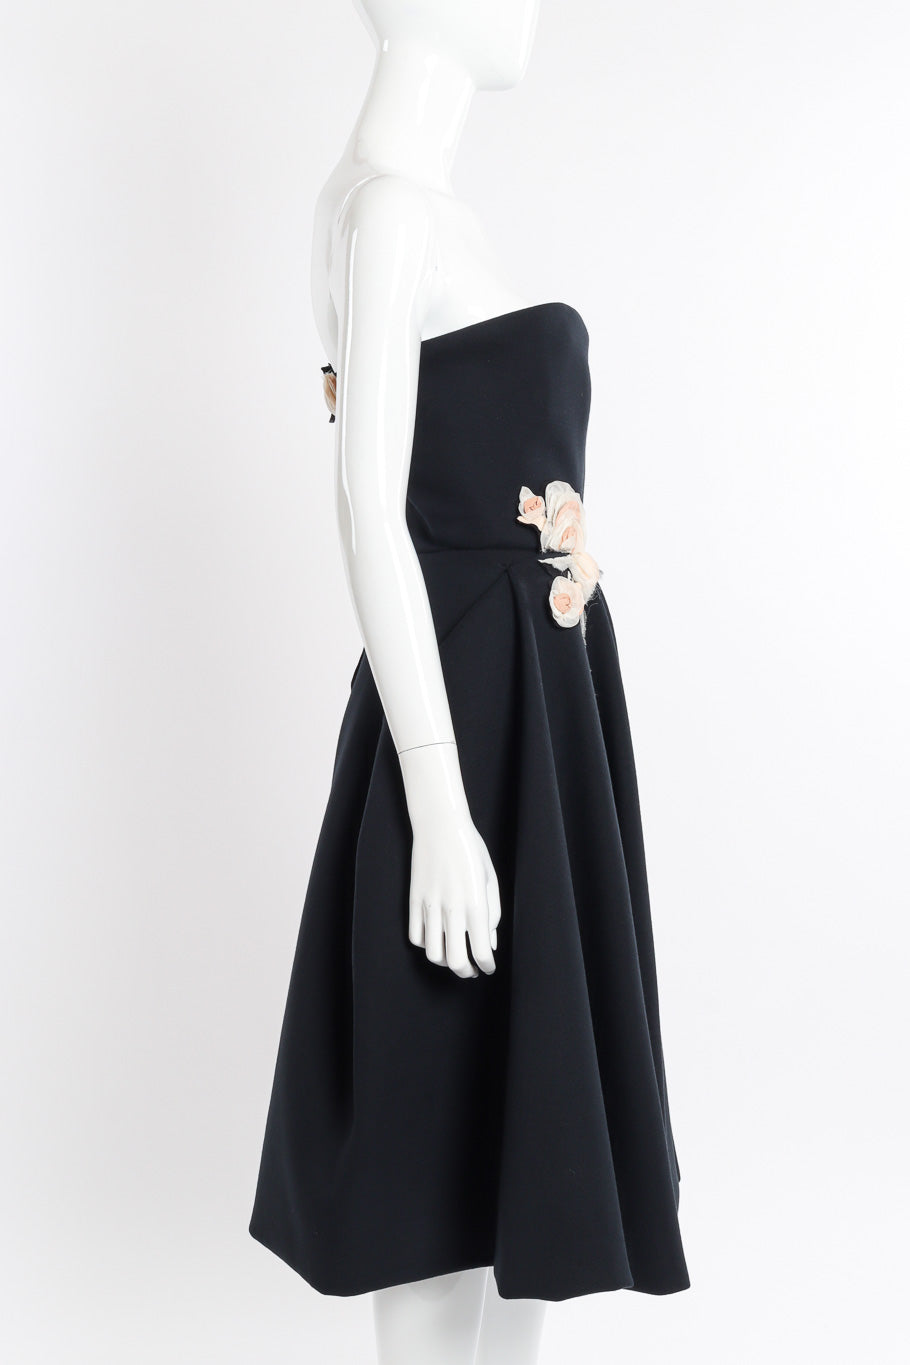 2013 F/W Strapless Floral Appliqué Dress by Lanvin on mannequin side @recessla